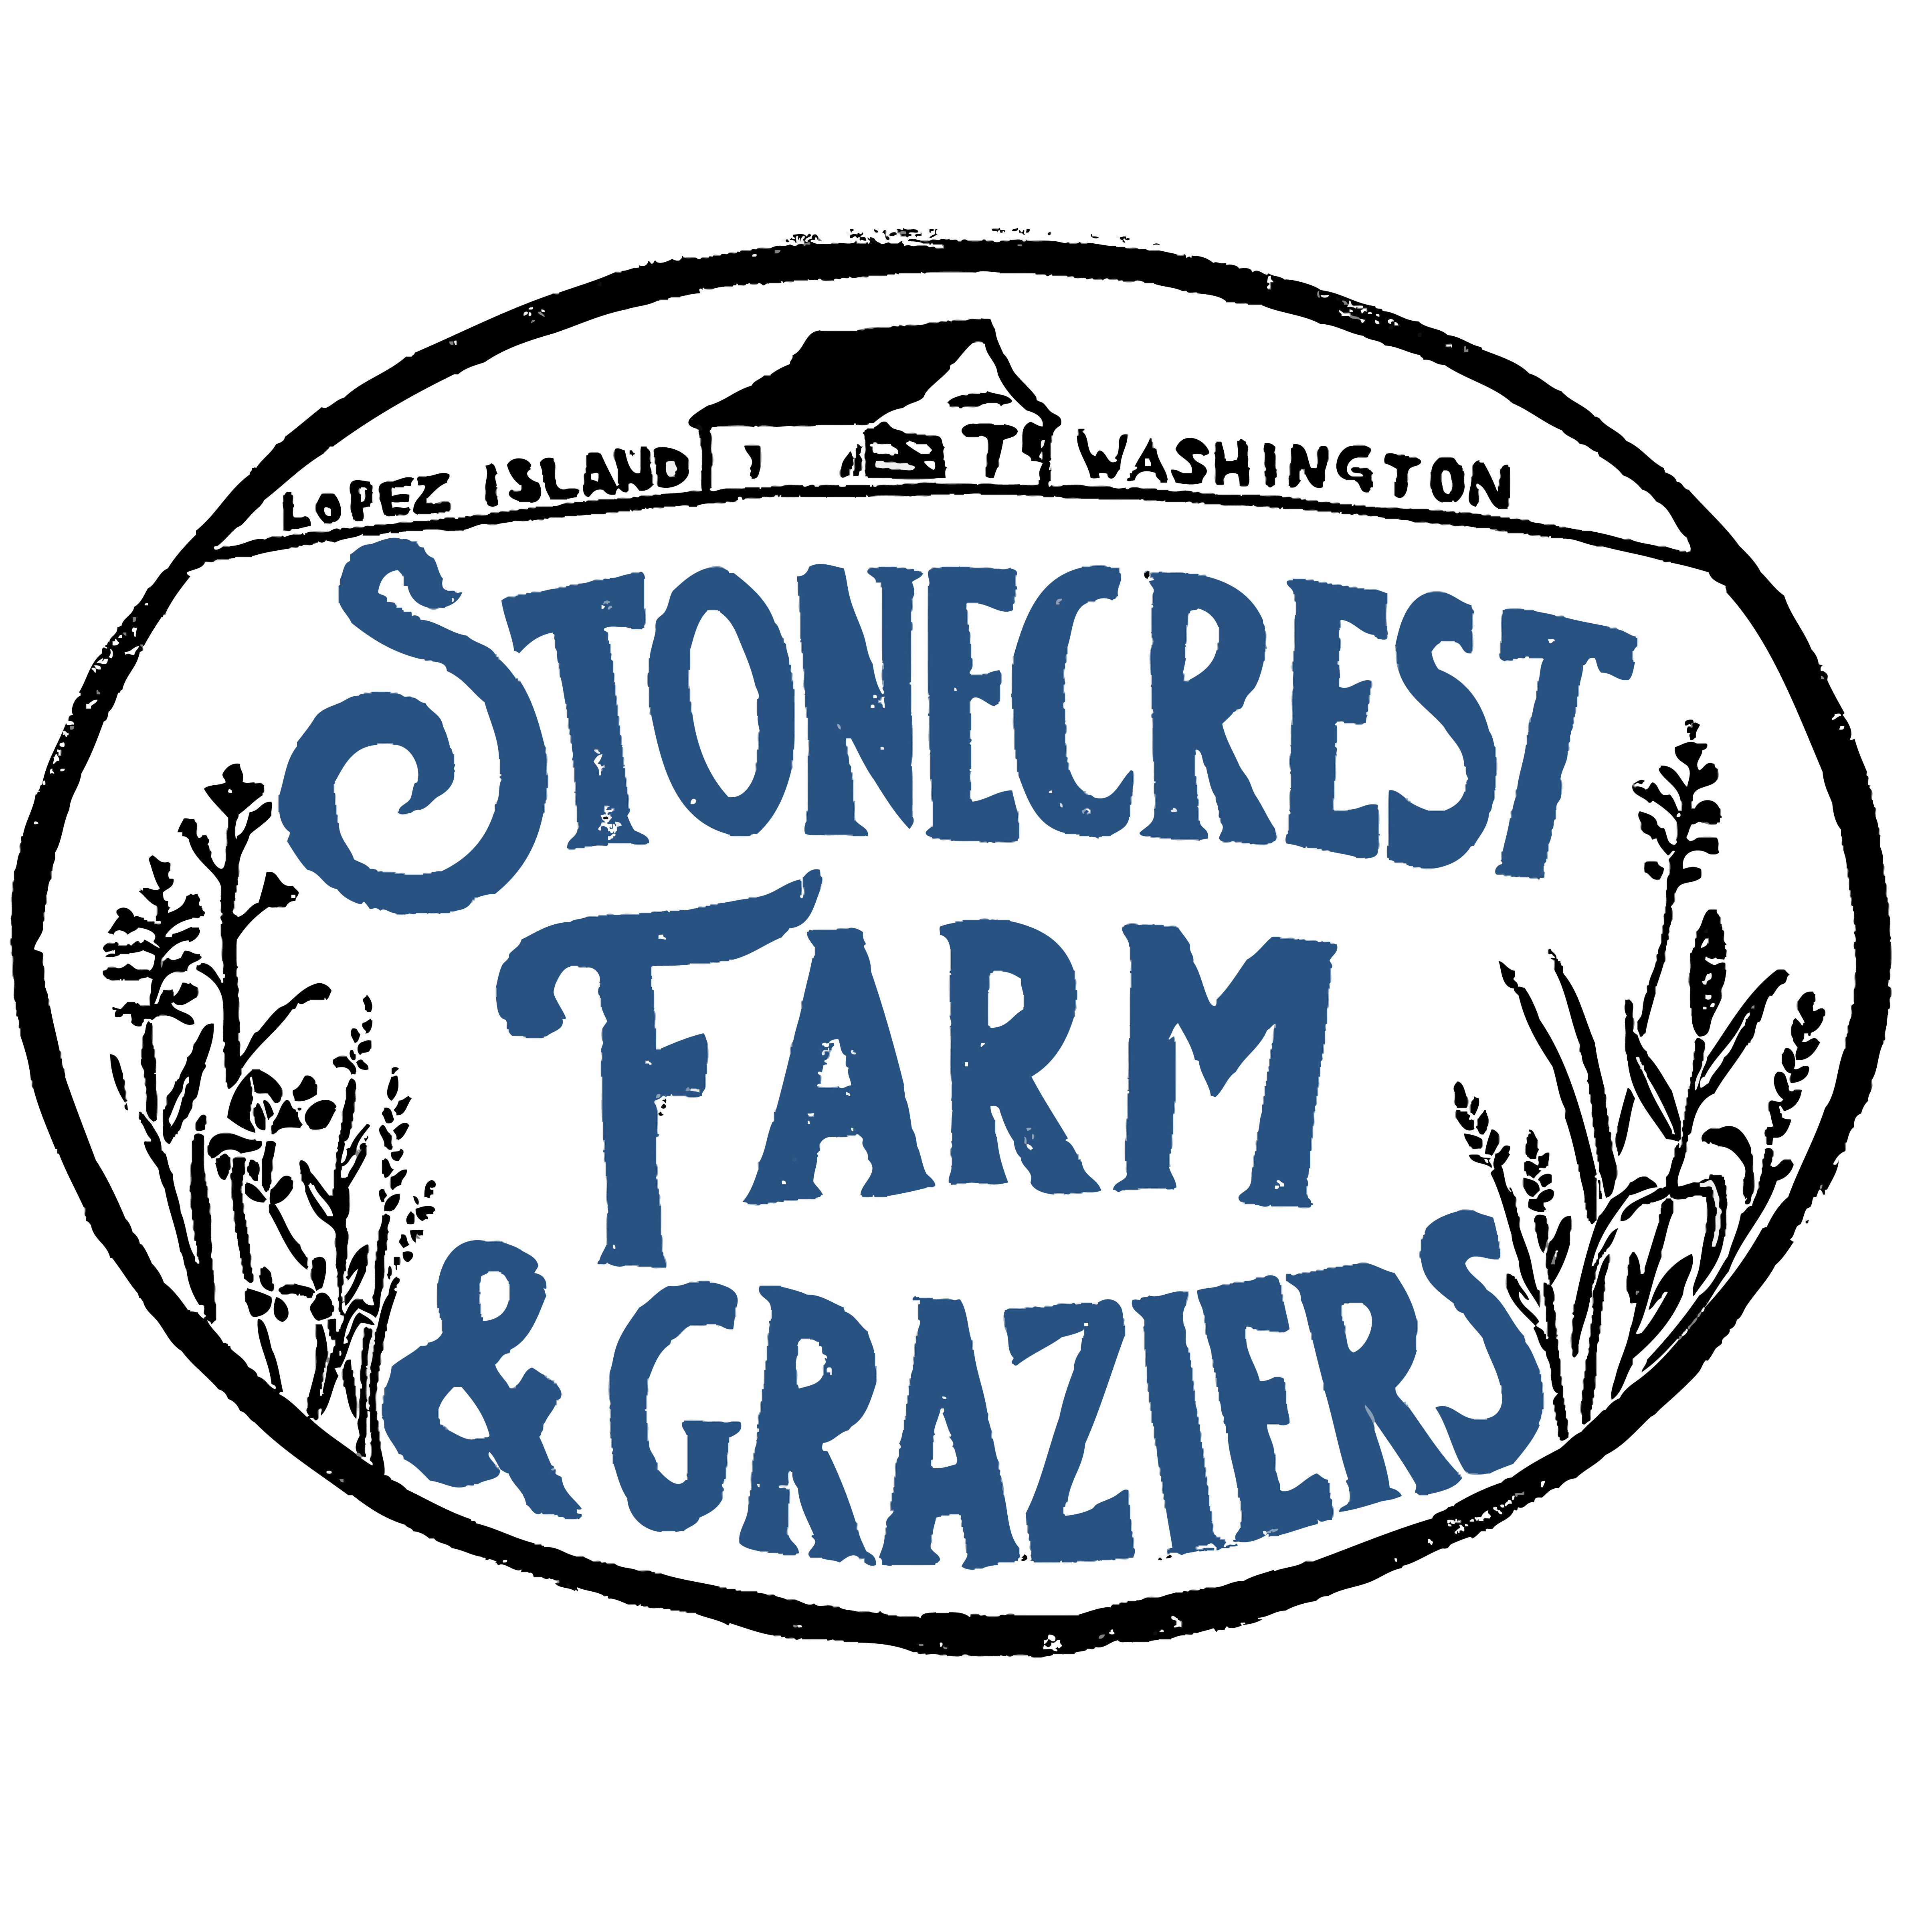 Stonecrest Farm & Graziers